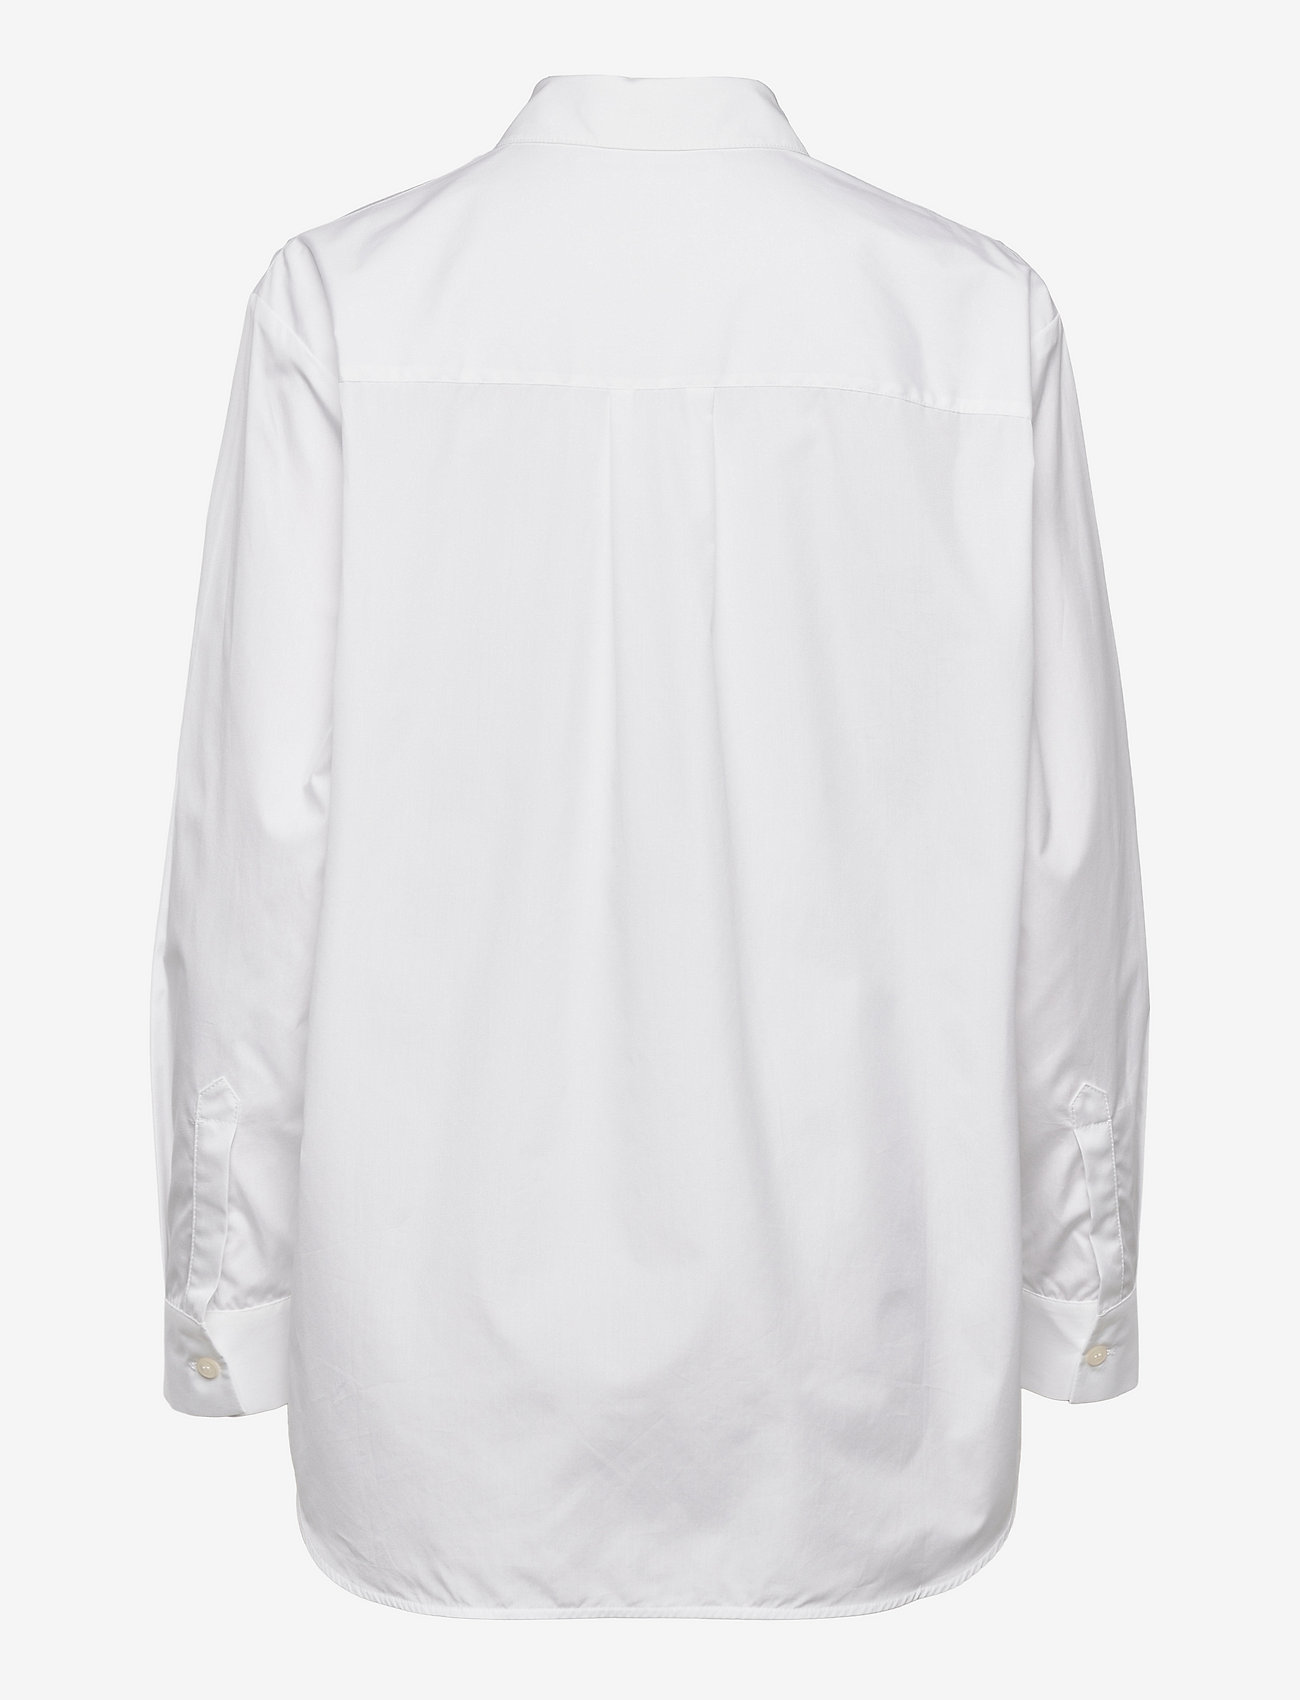 Samsøe Samsøe - Haley shirt 11468 - koszule z długimi rękawami - white - 1